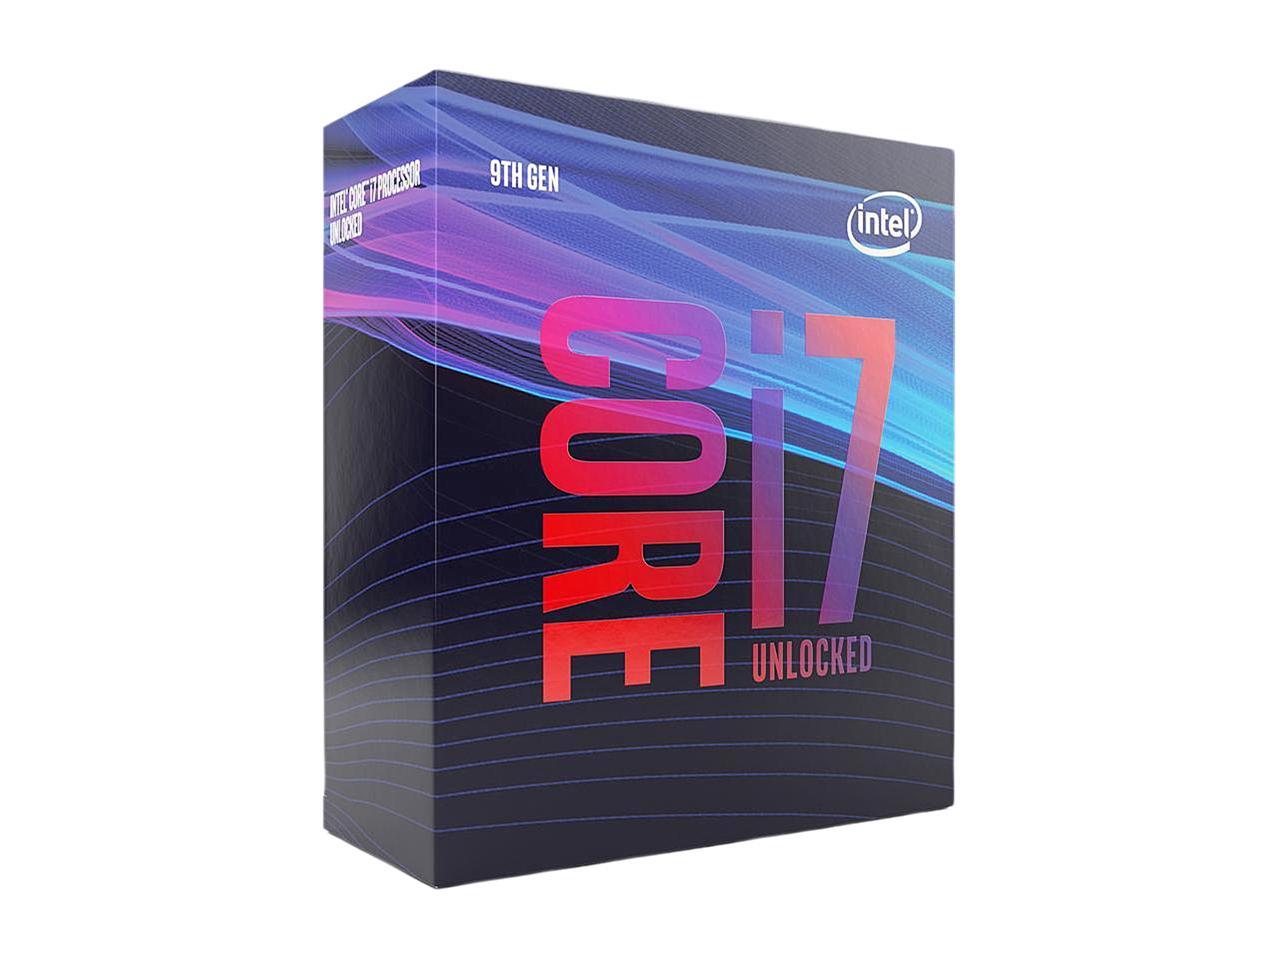 Intel Core i7 9th Gen - Core i7-9700K Coffee Lake 8-Core 3.6 GHz (4.9 GHz  Turbo) LGA 1151 (300 Series) 95W BX80684I79700K Desktop Processor Intel UHD 